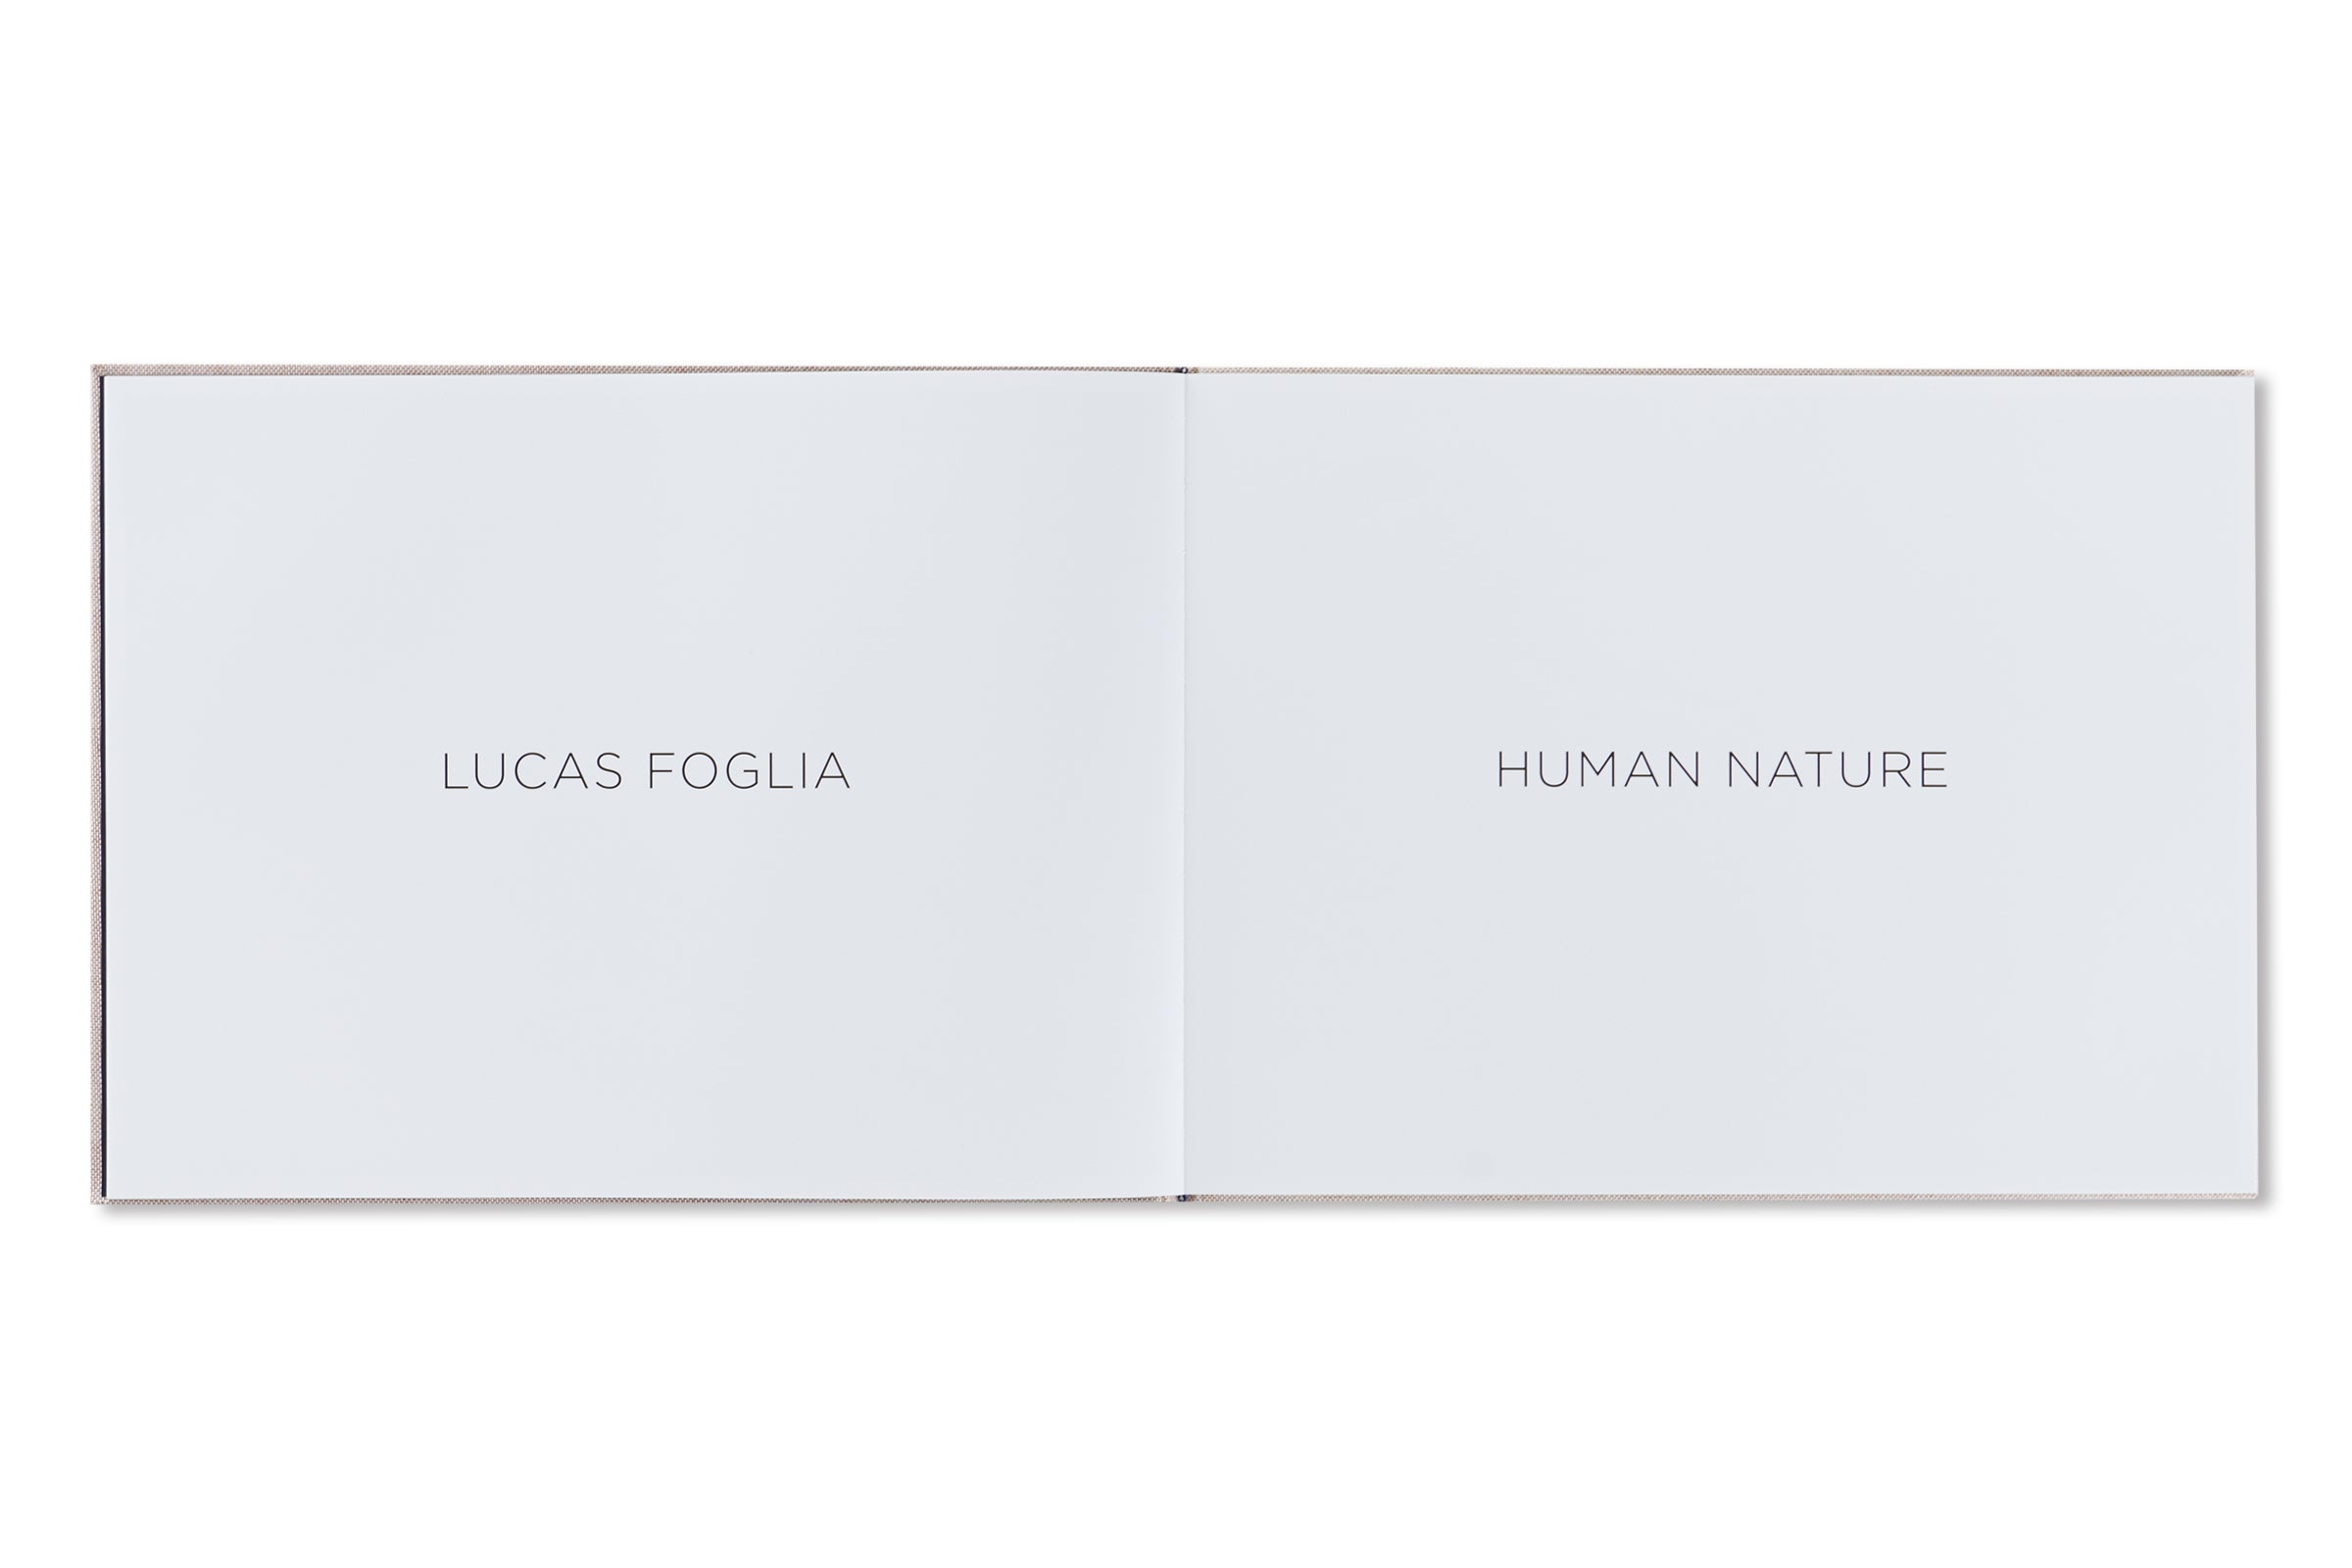 HUMAN NATURE by Lucas Foglia